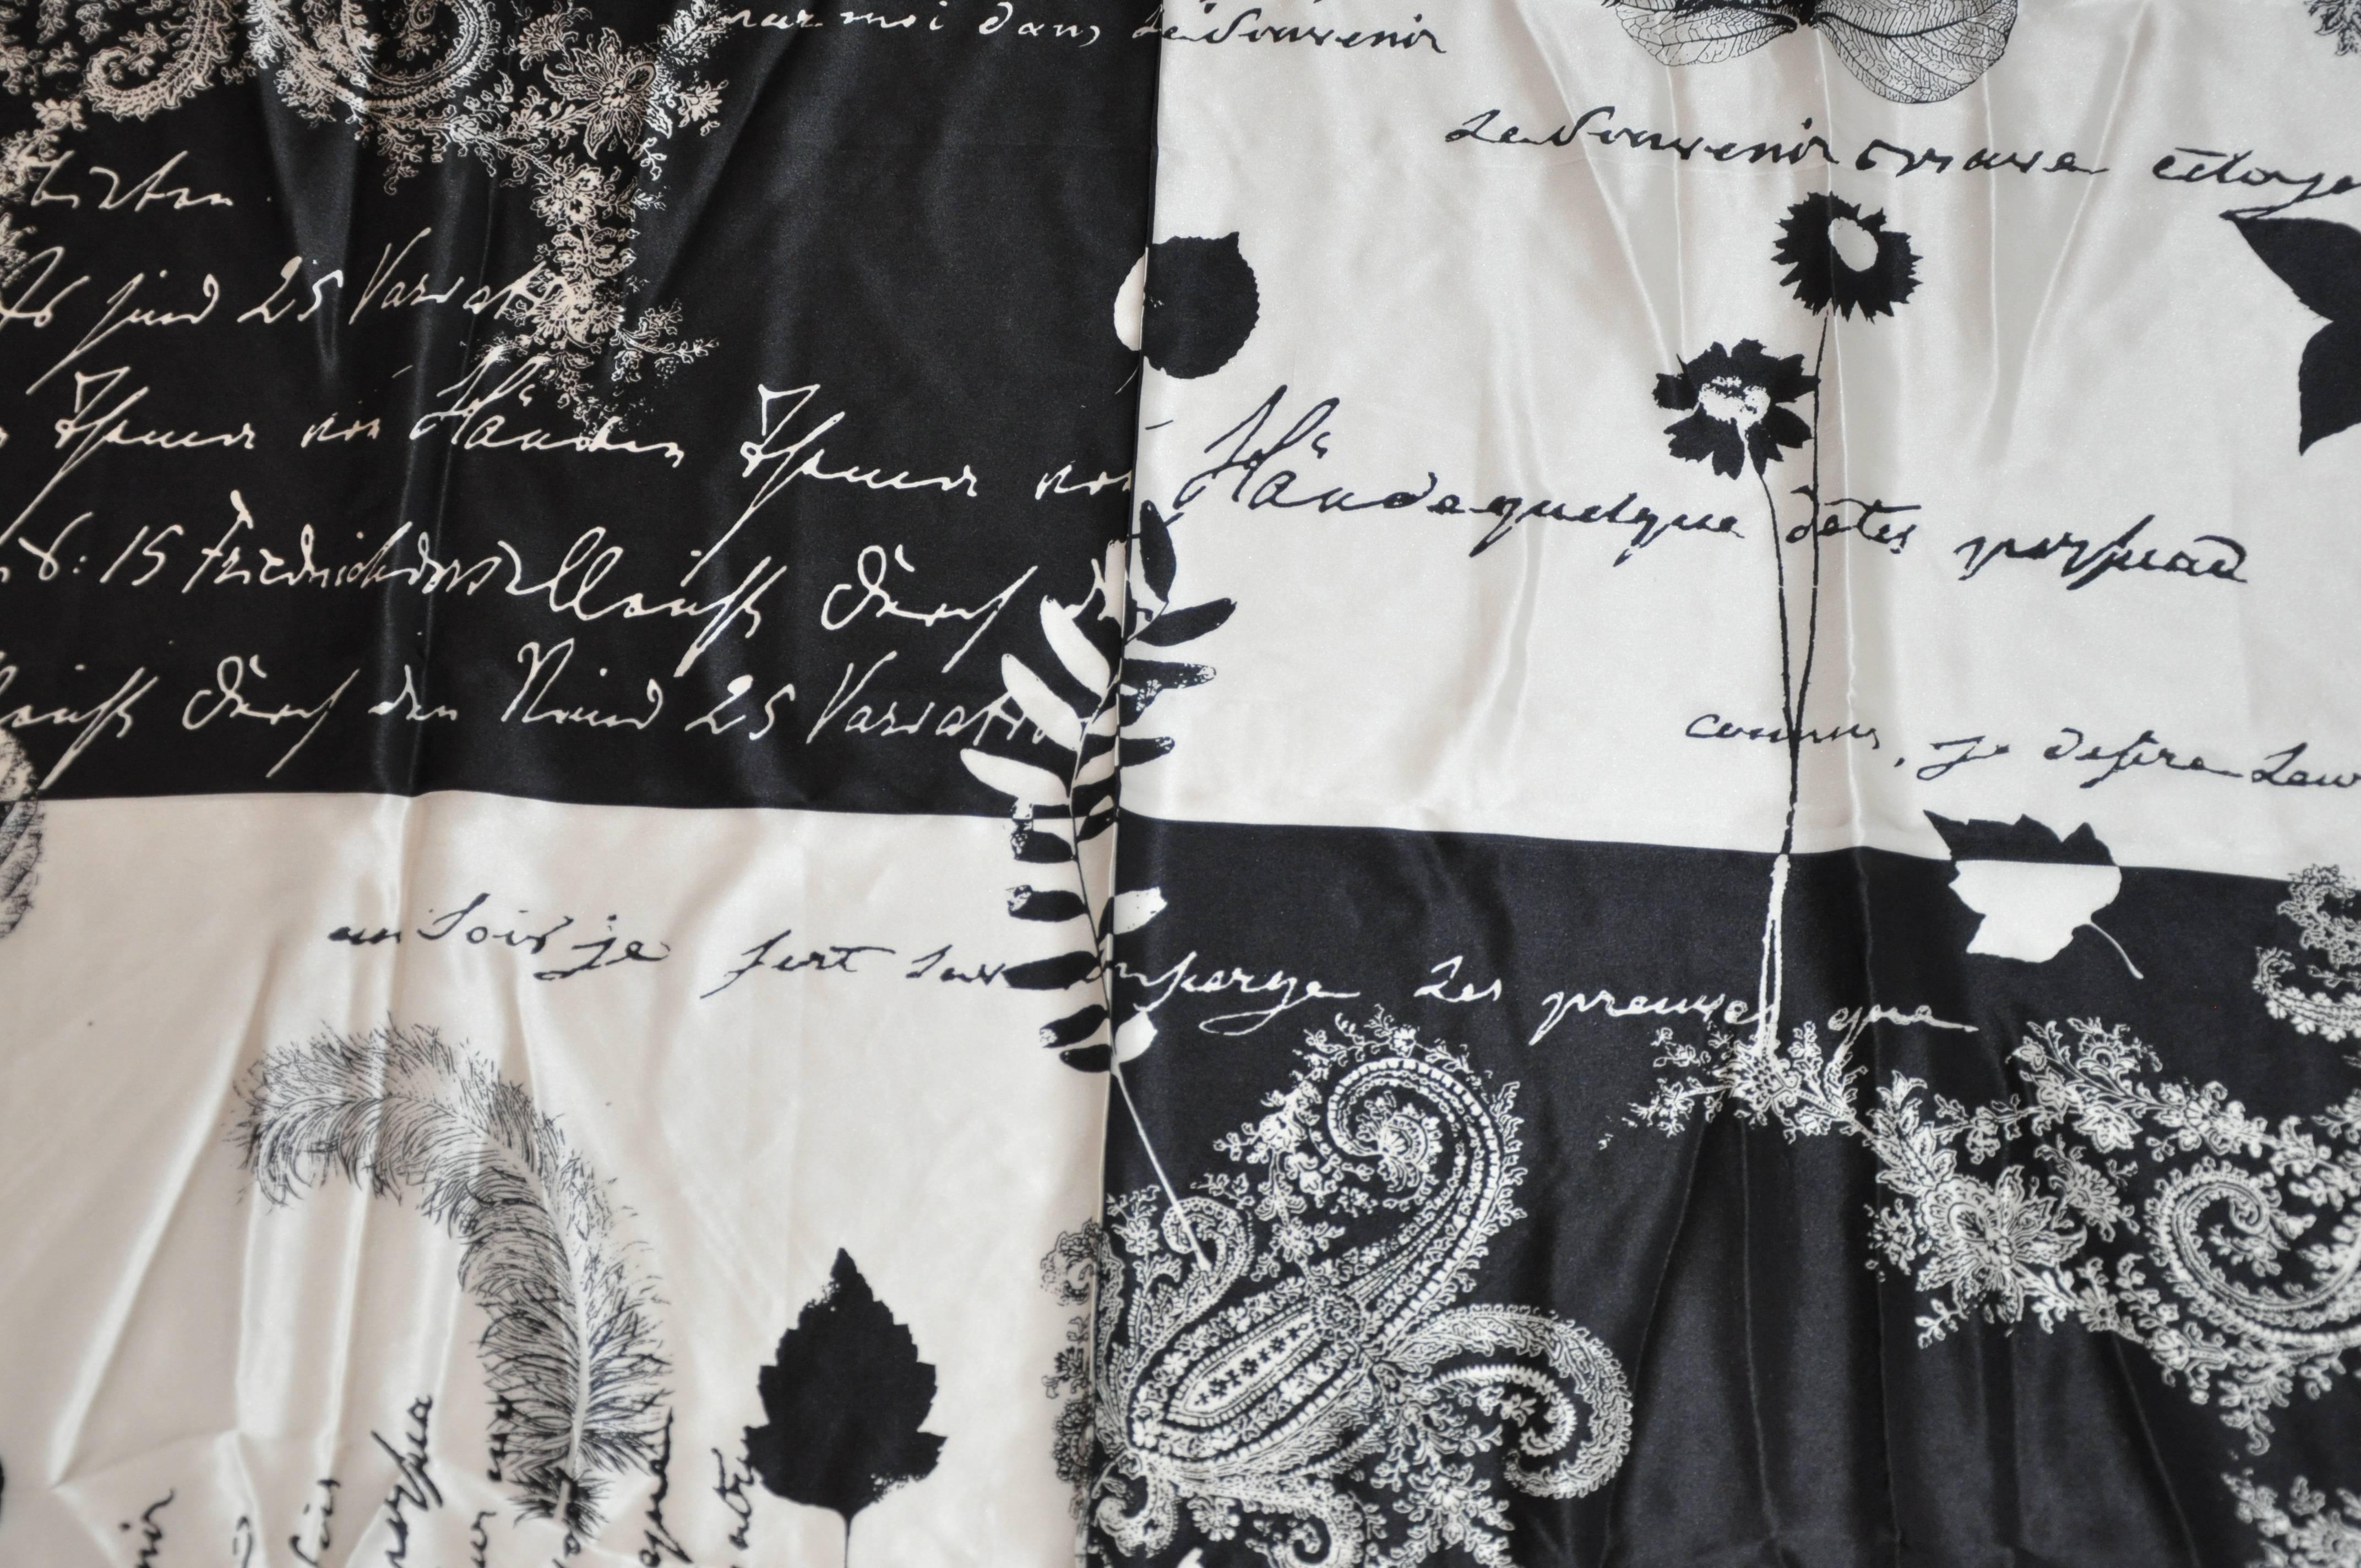 Women's Emanuel Ungaro Black & White silk scarf of writings